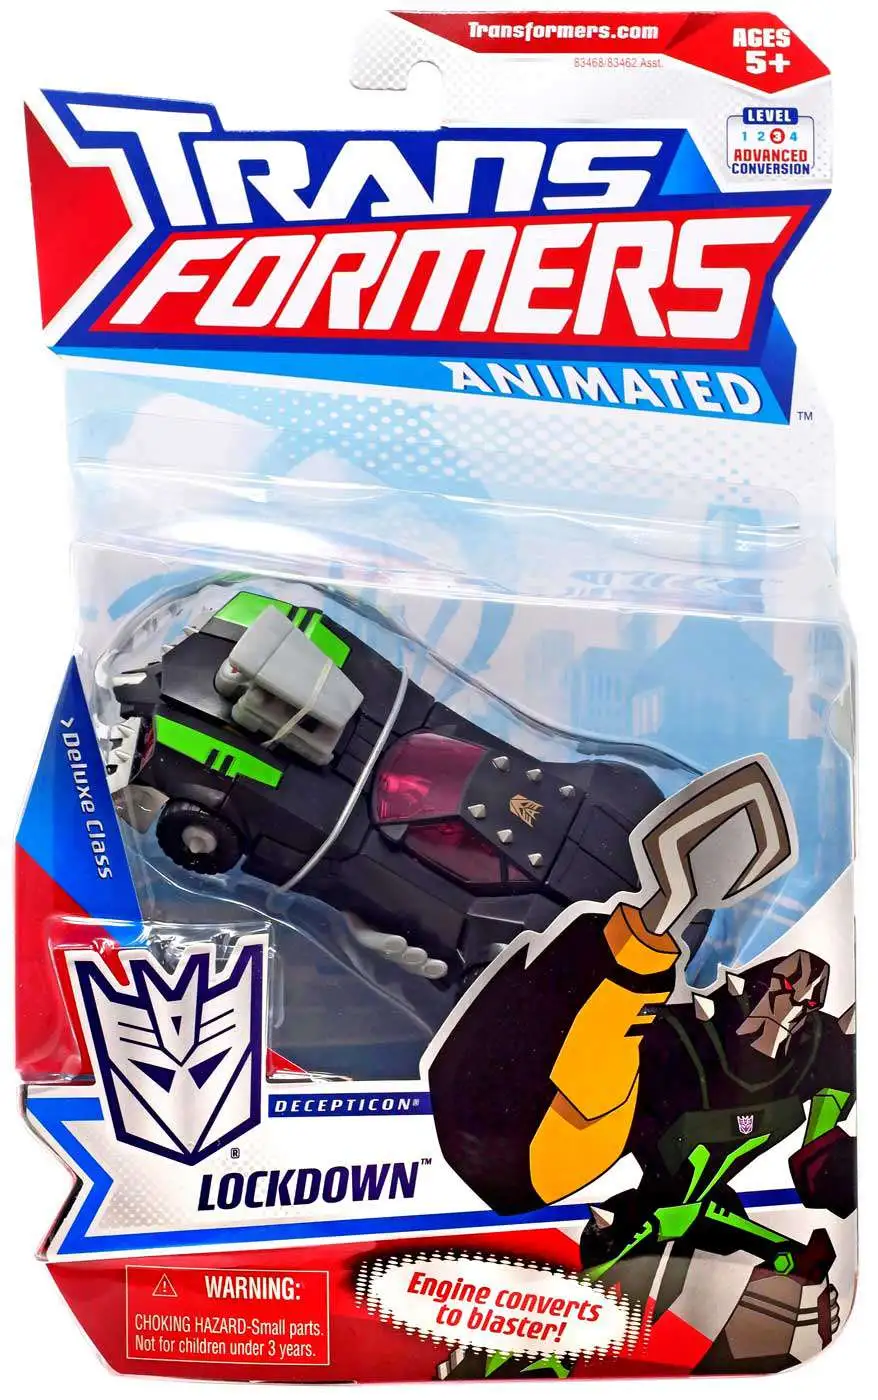 Transformers Animated Lockdown Deluxe Action Figure Hasbro - ToyWiz